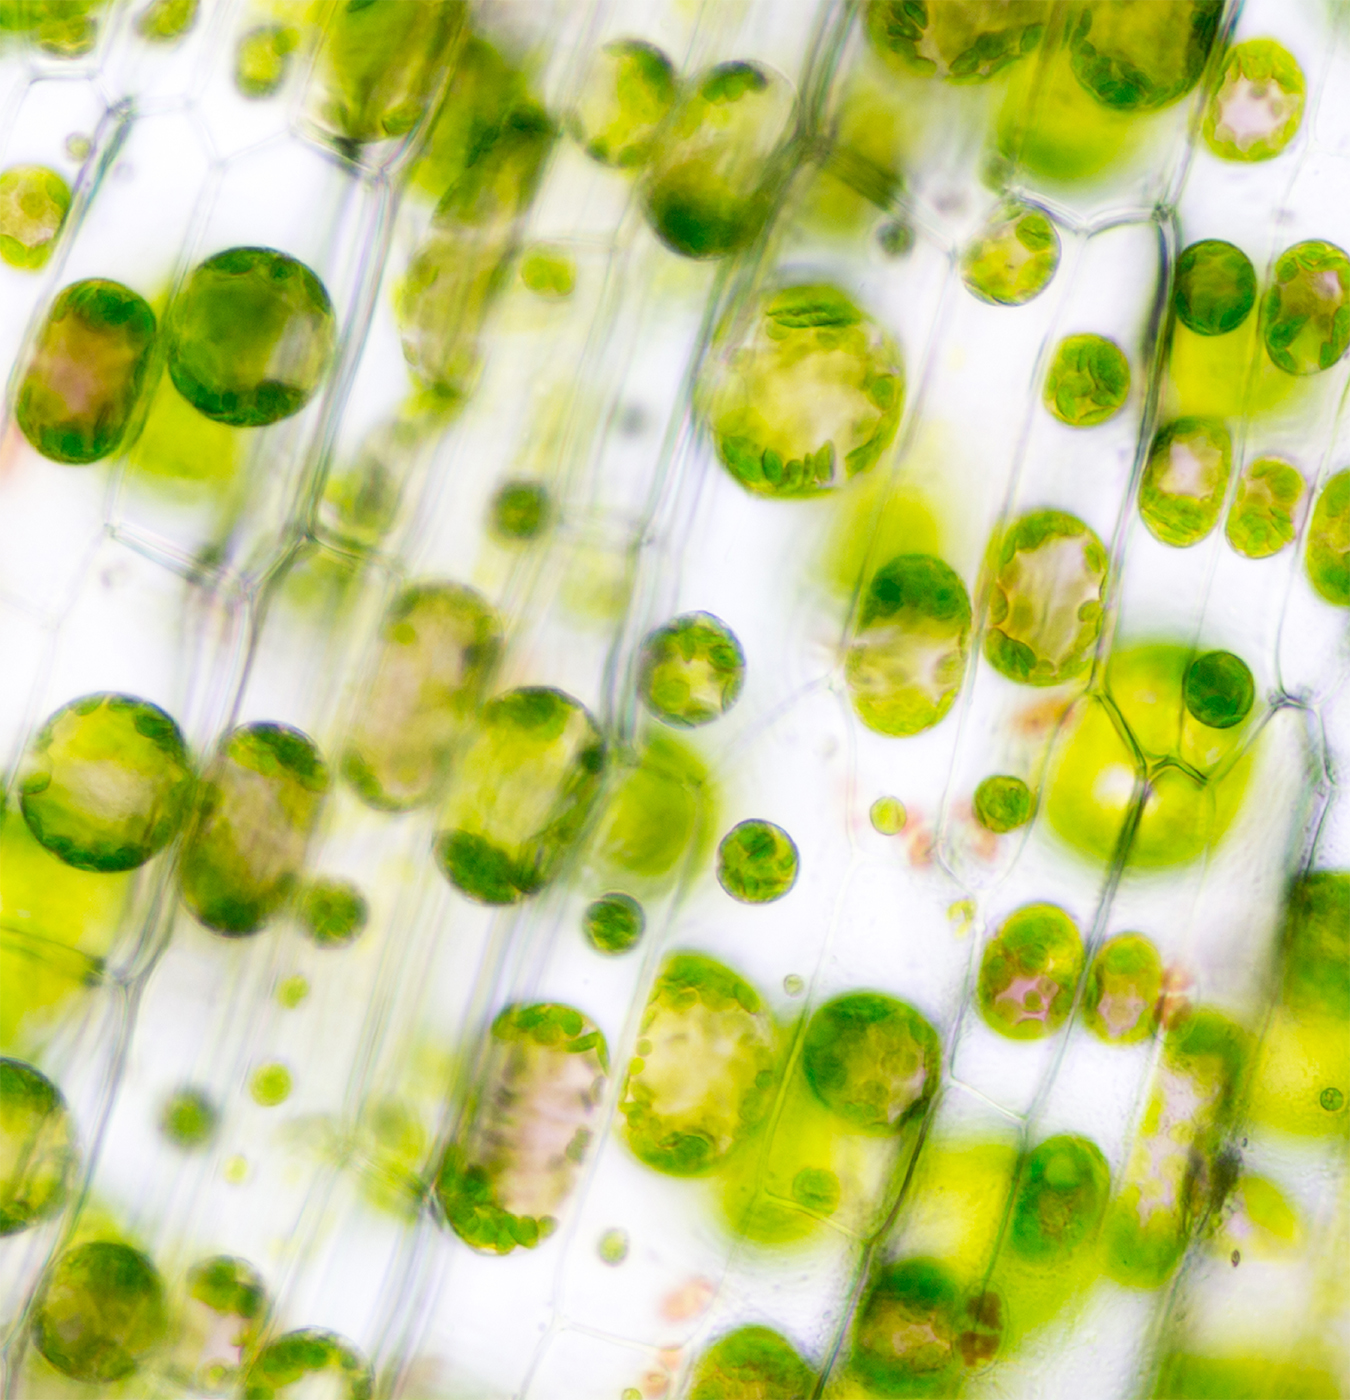 Green microalgae